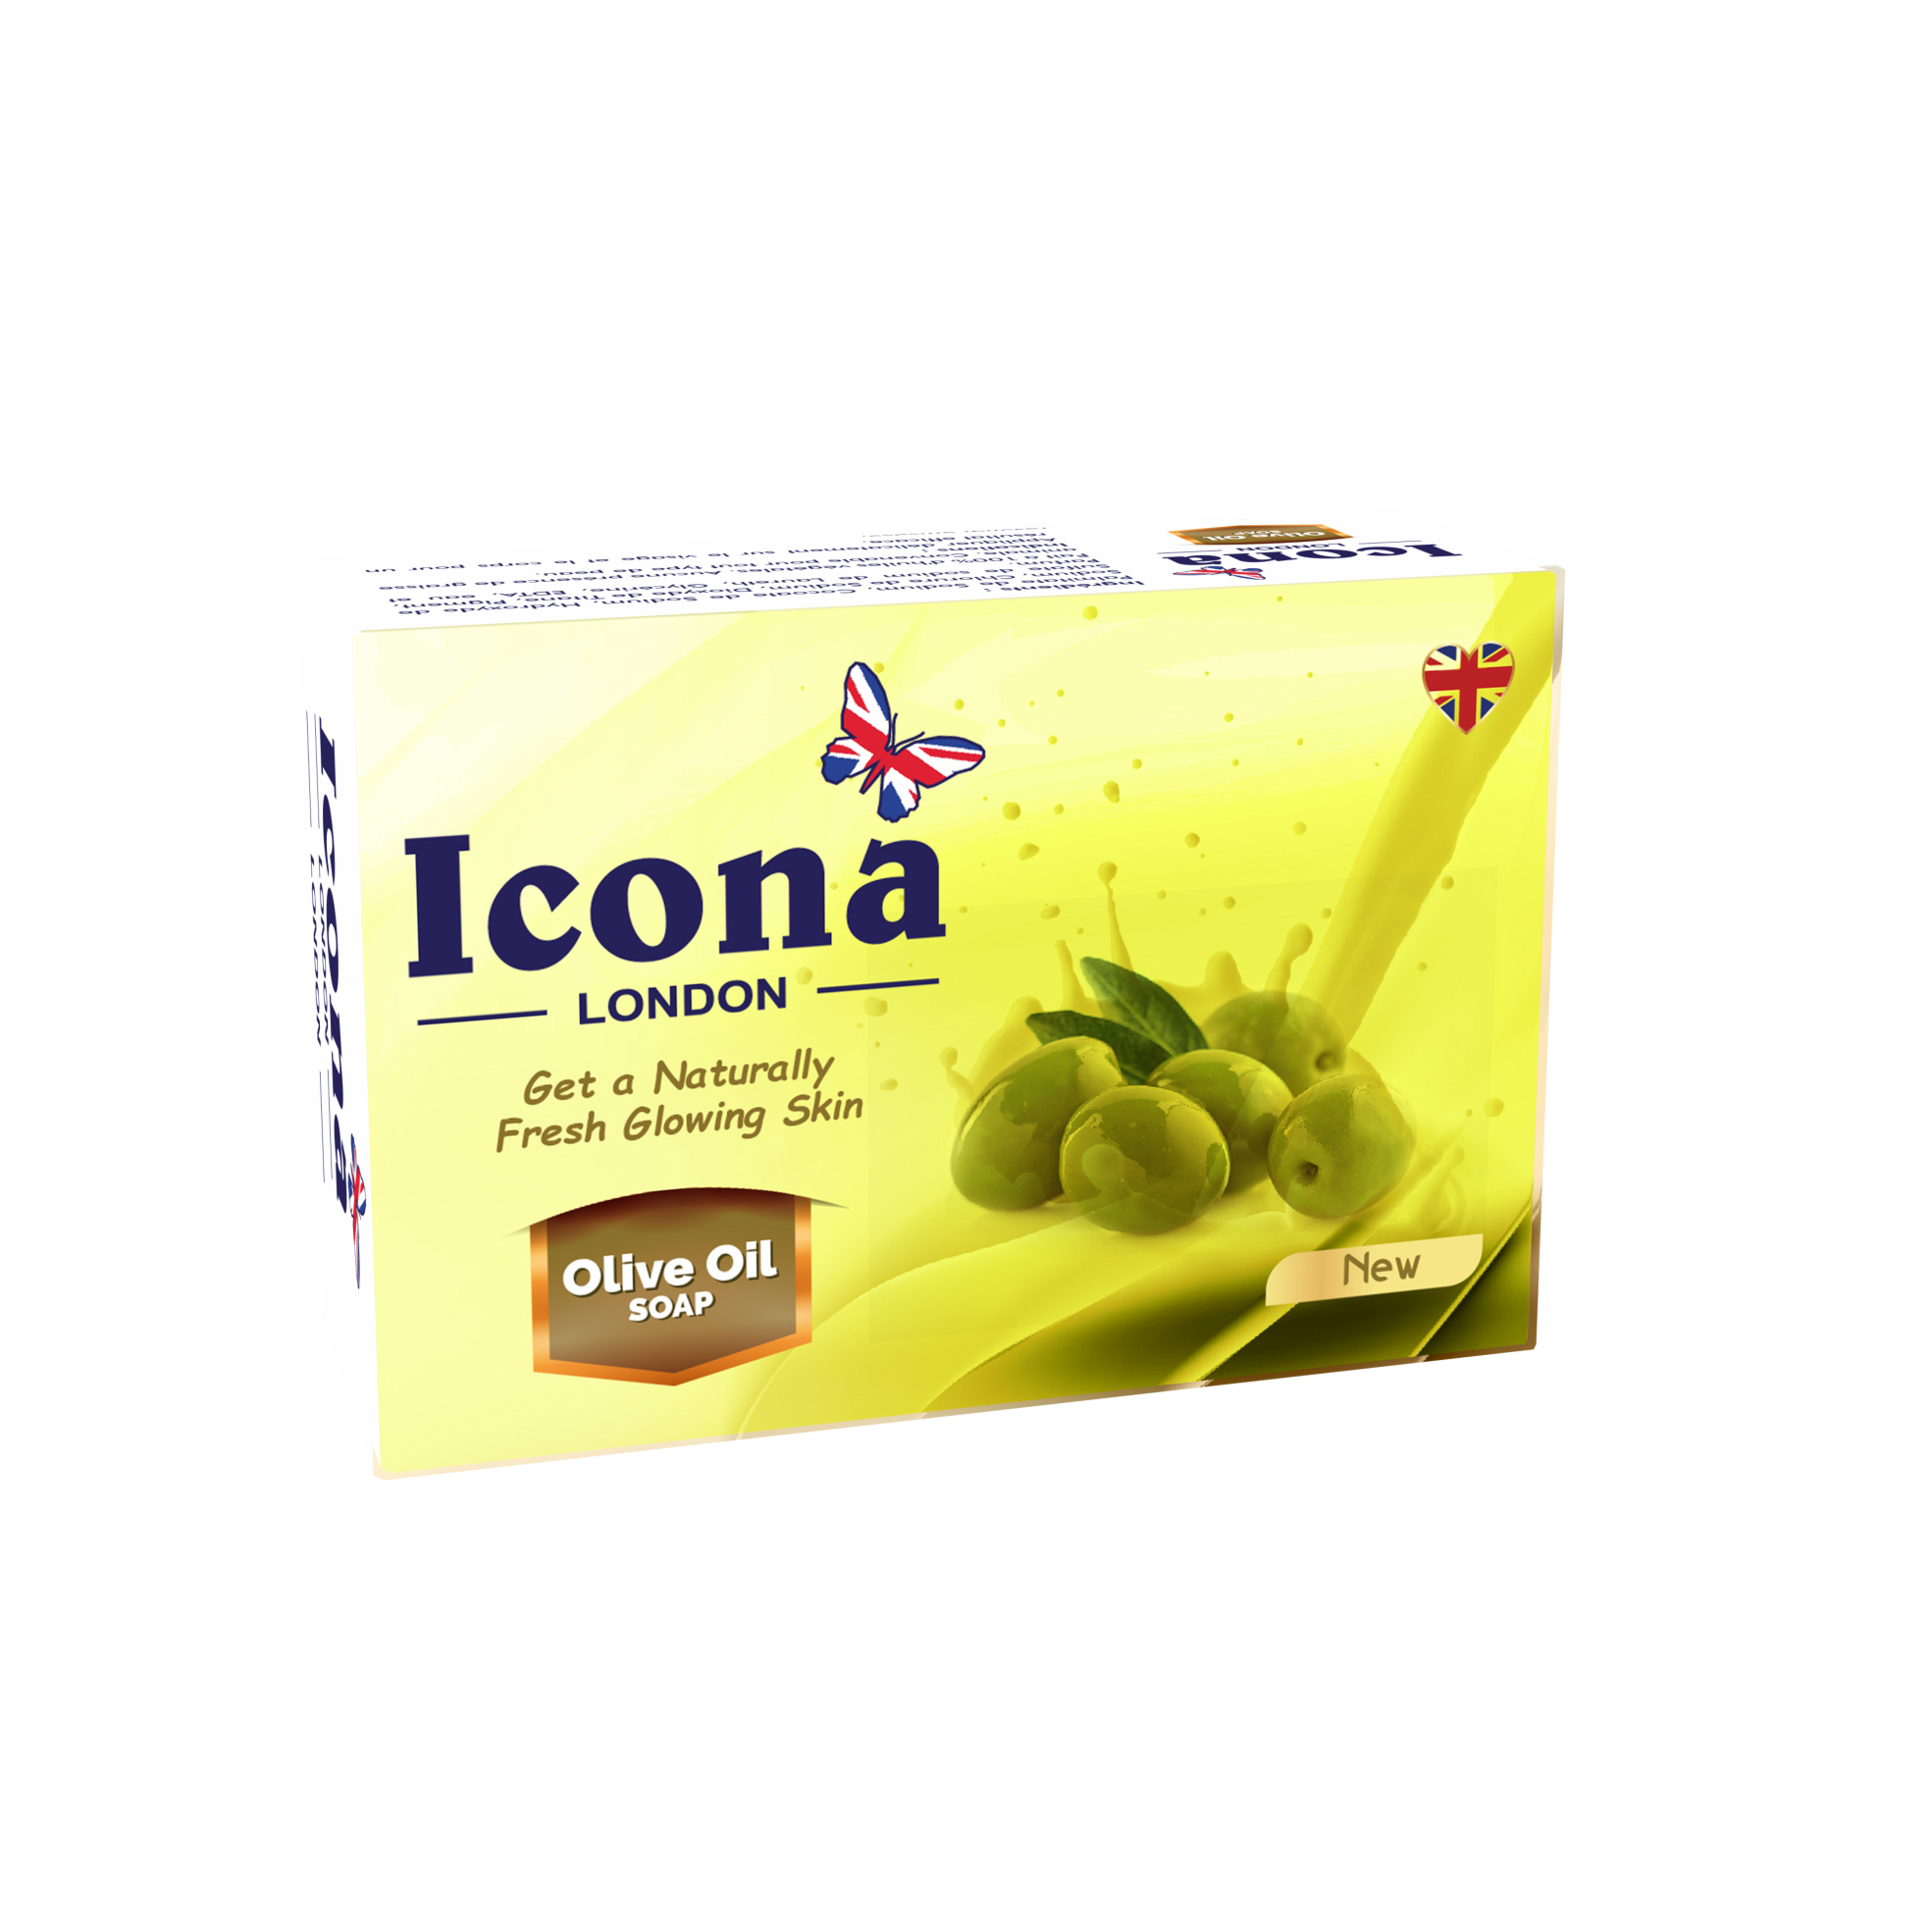 Icona London Beauty Soap (Olive Oil)